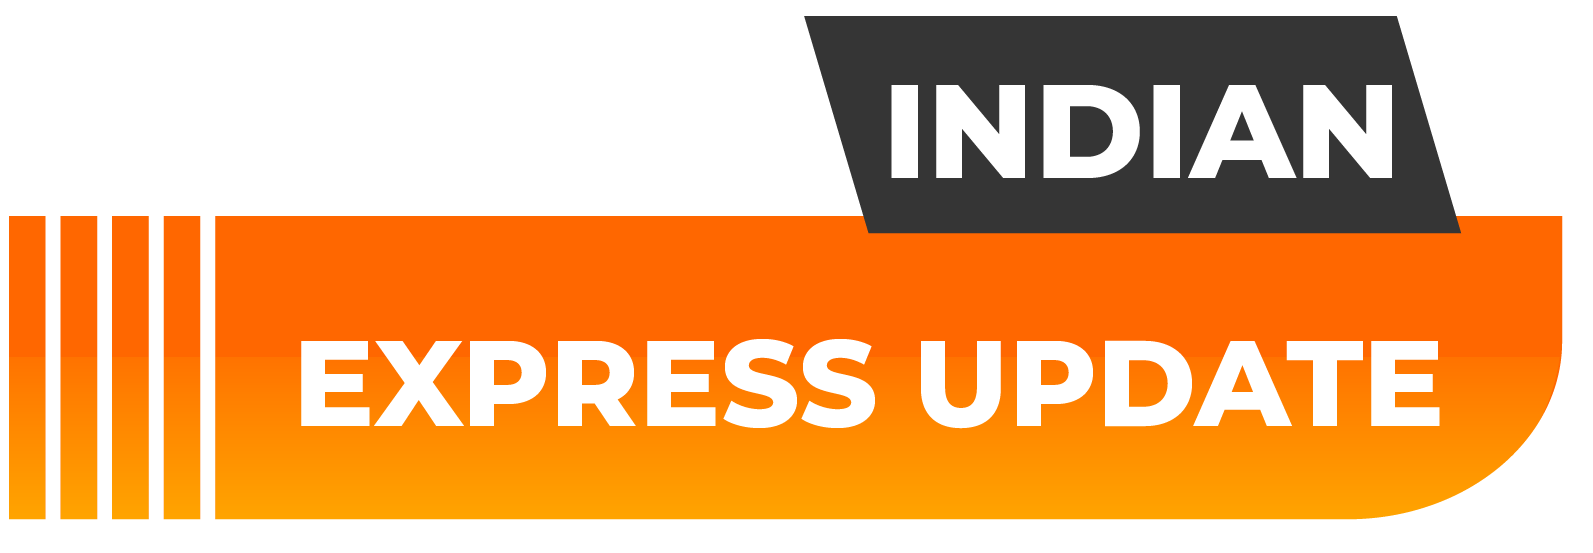 Indian Express Update